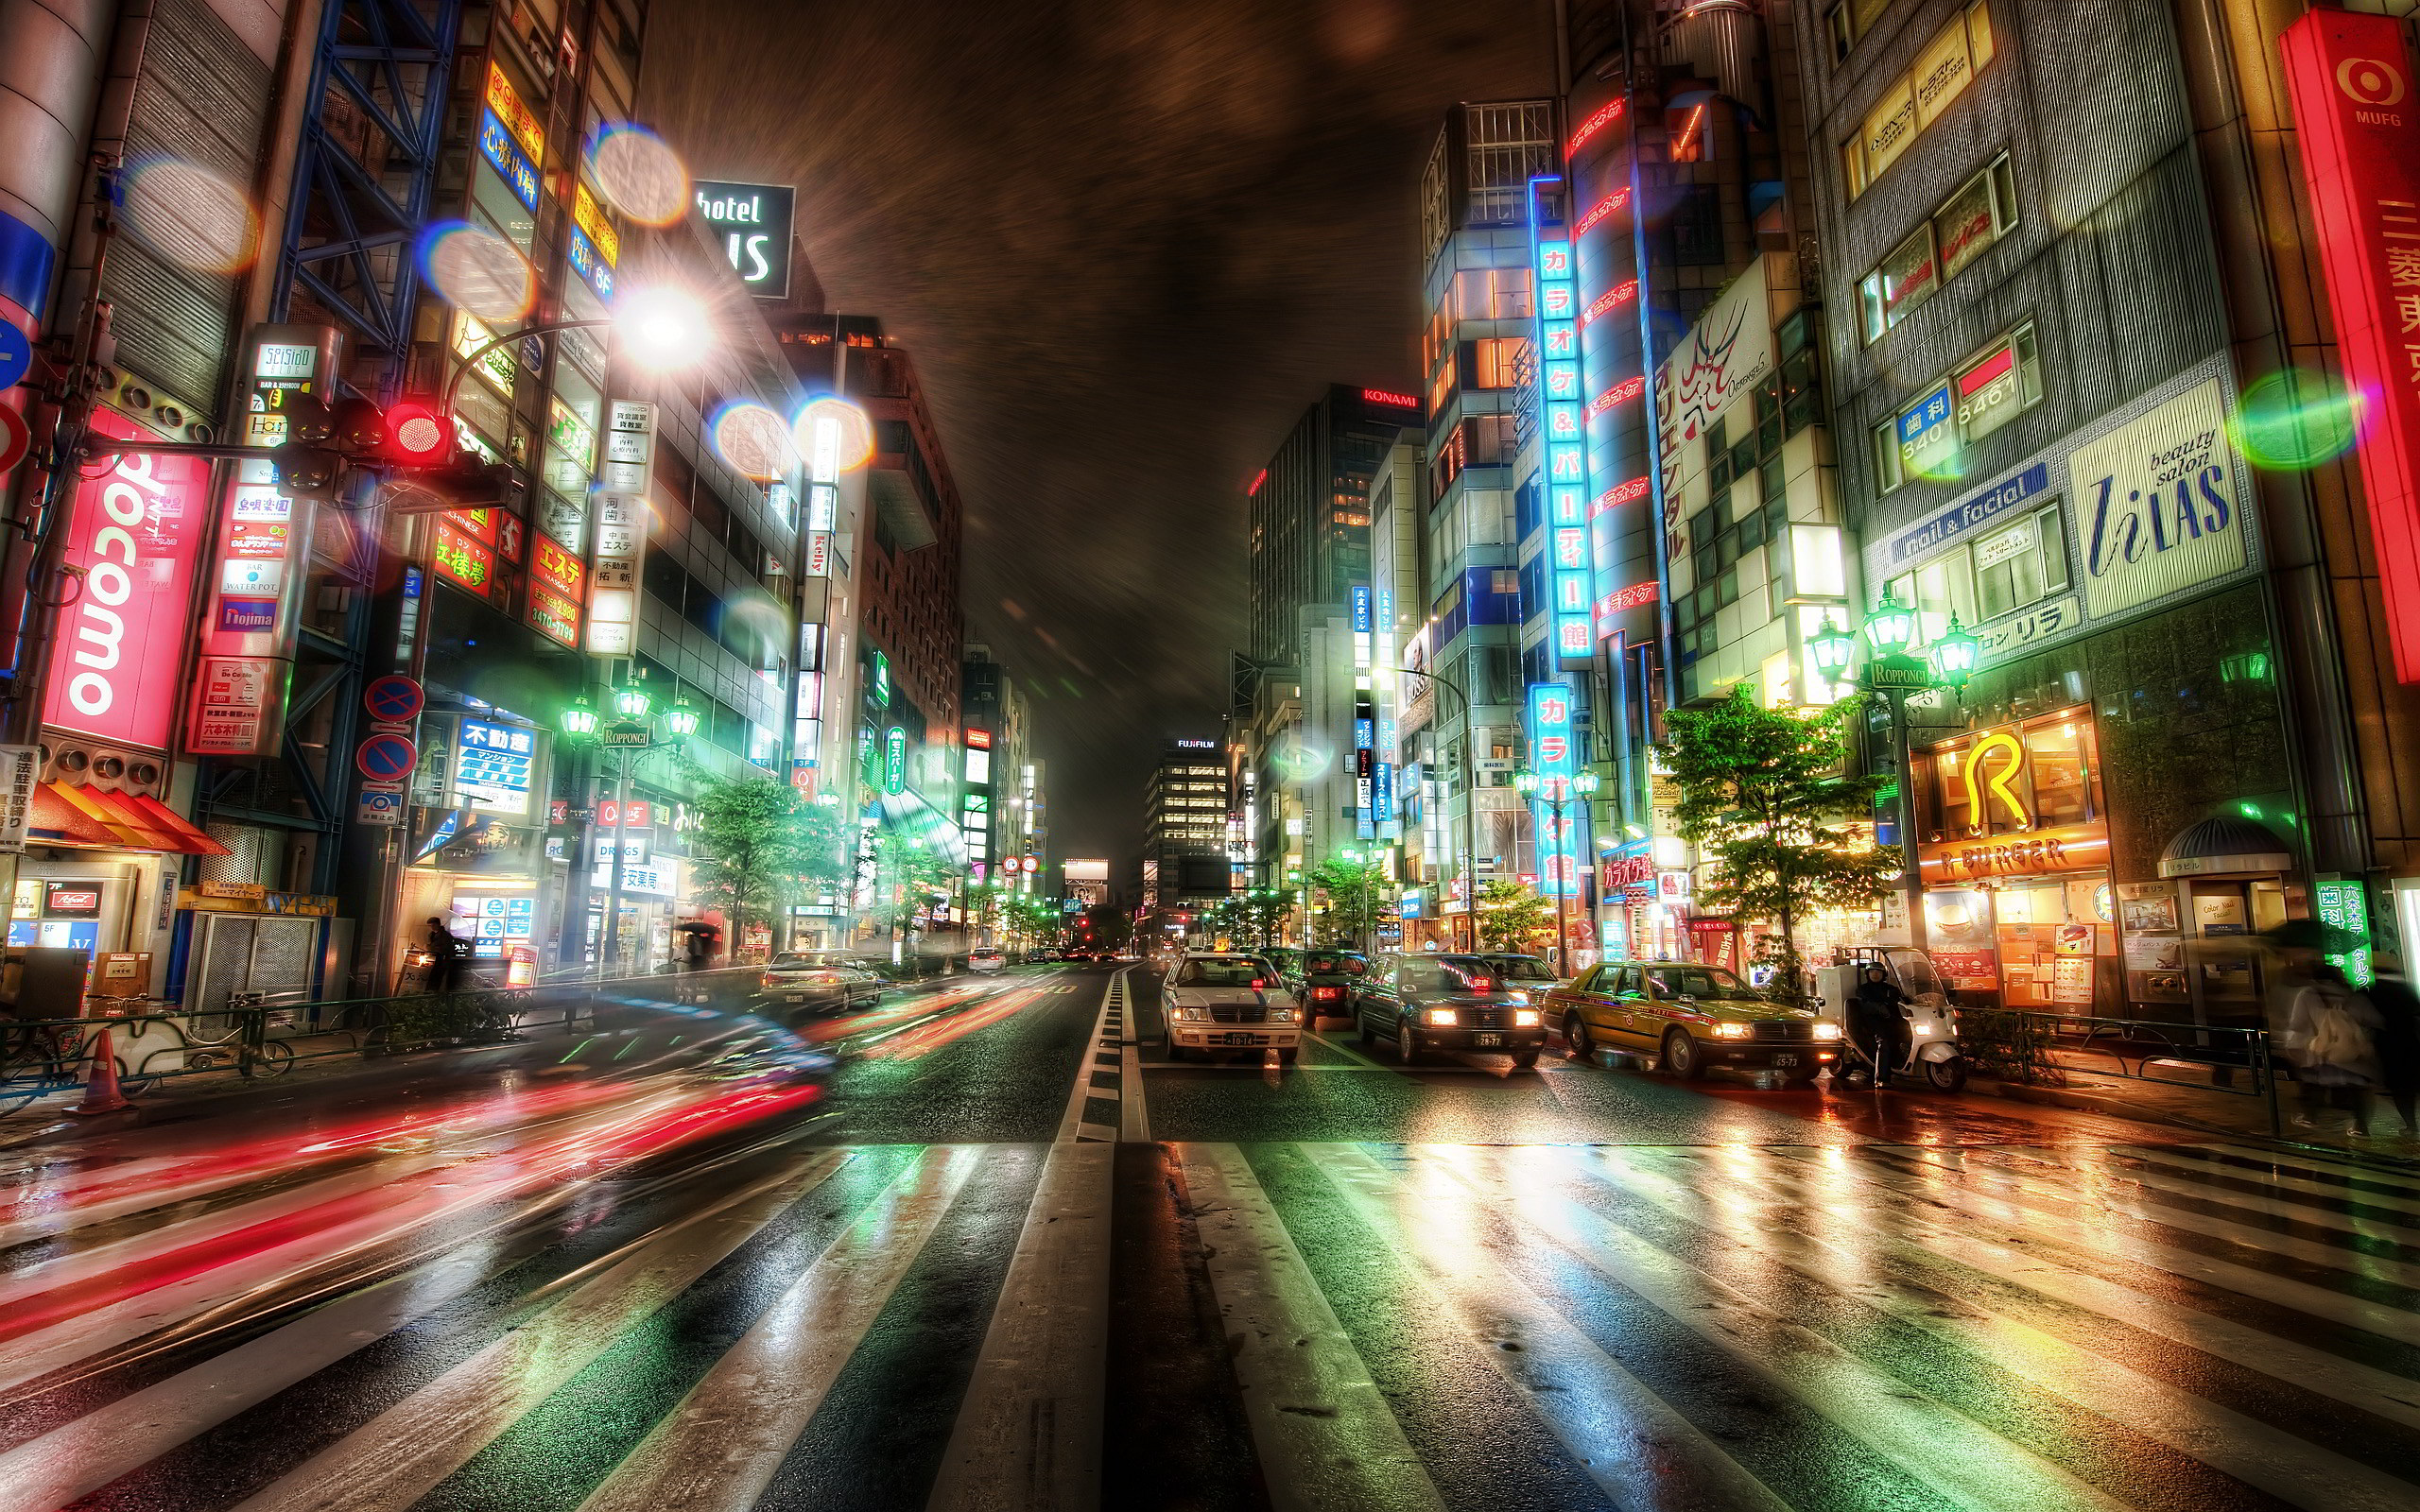 Tokyo City Night